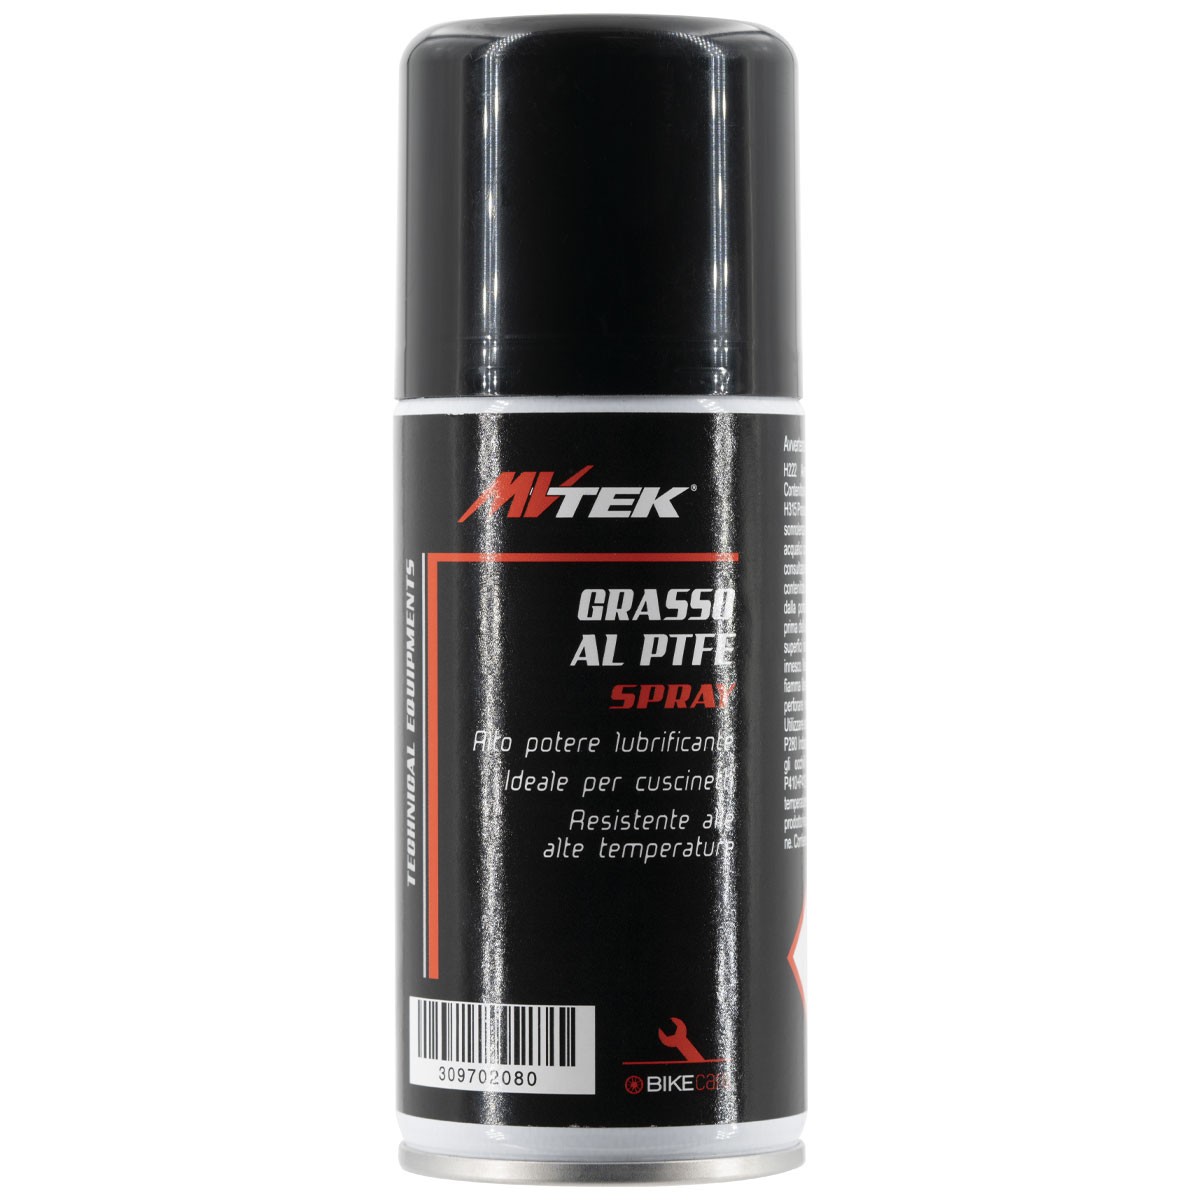 MVTEK - Grasso Spray al PTFE